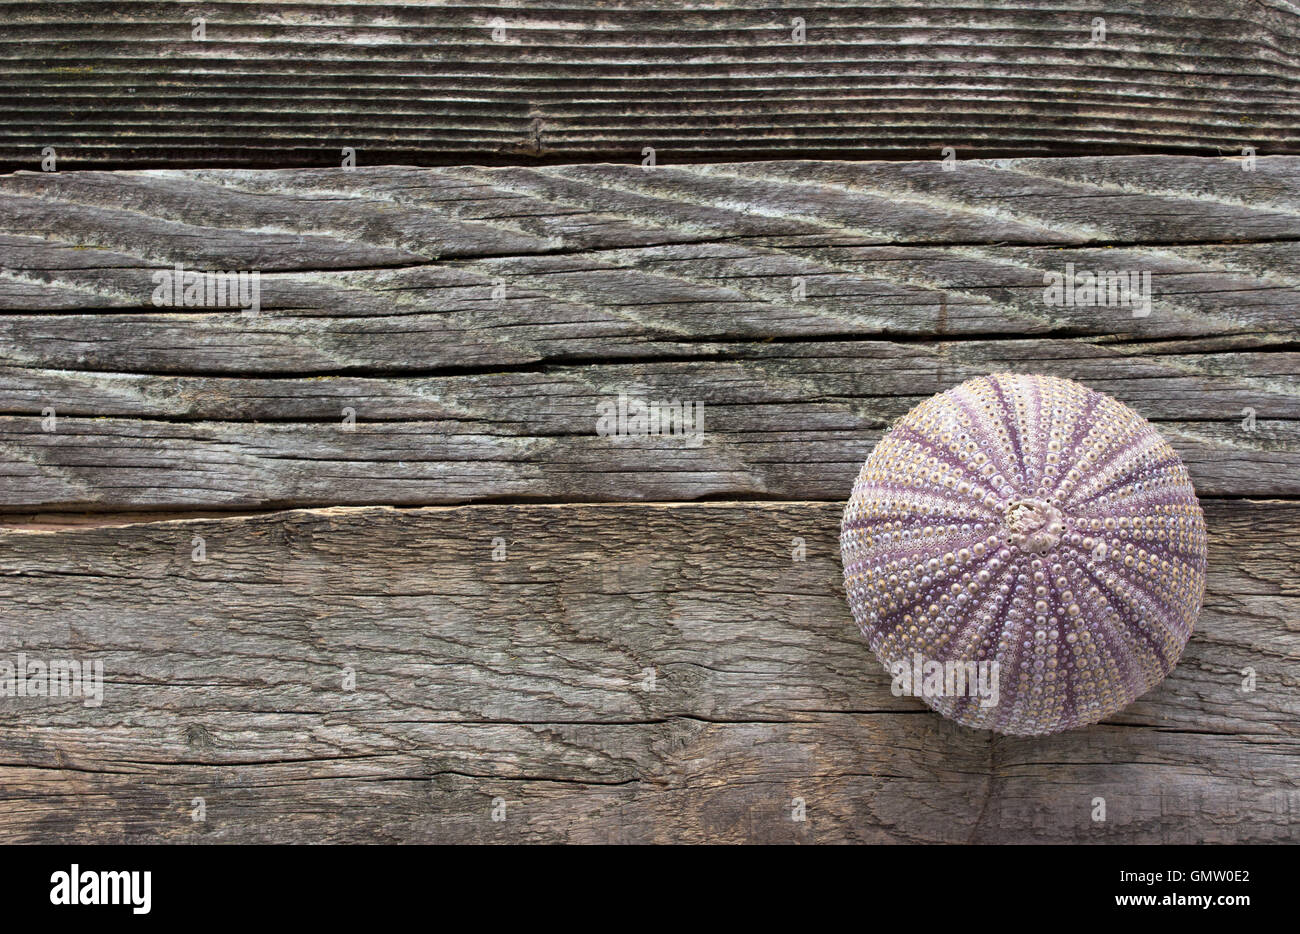 Sea urchin skeleton on old wooden background Stock Photo